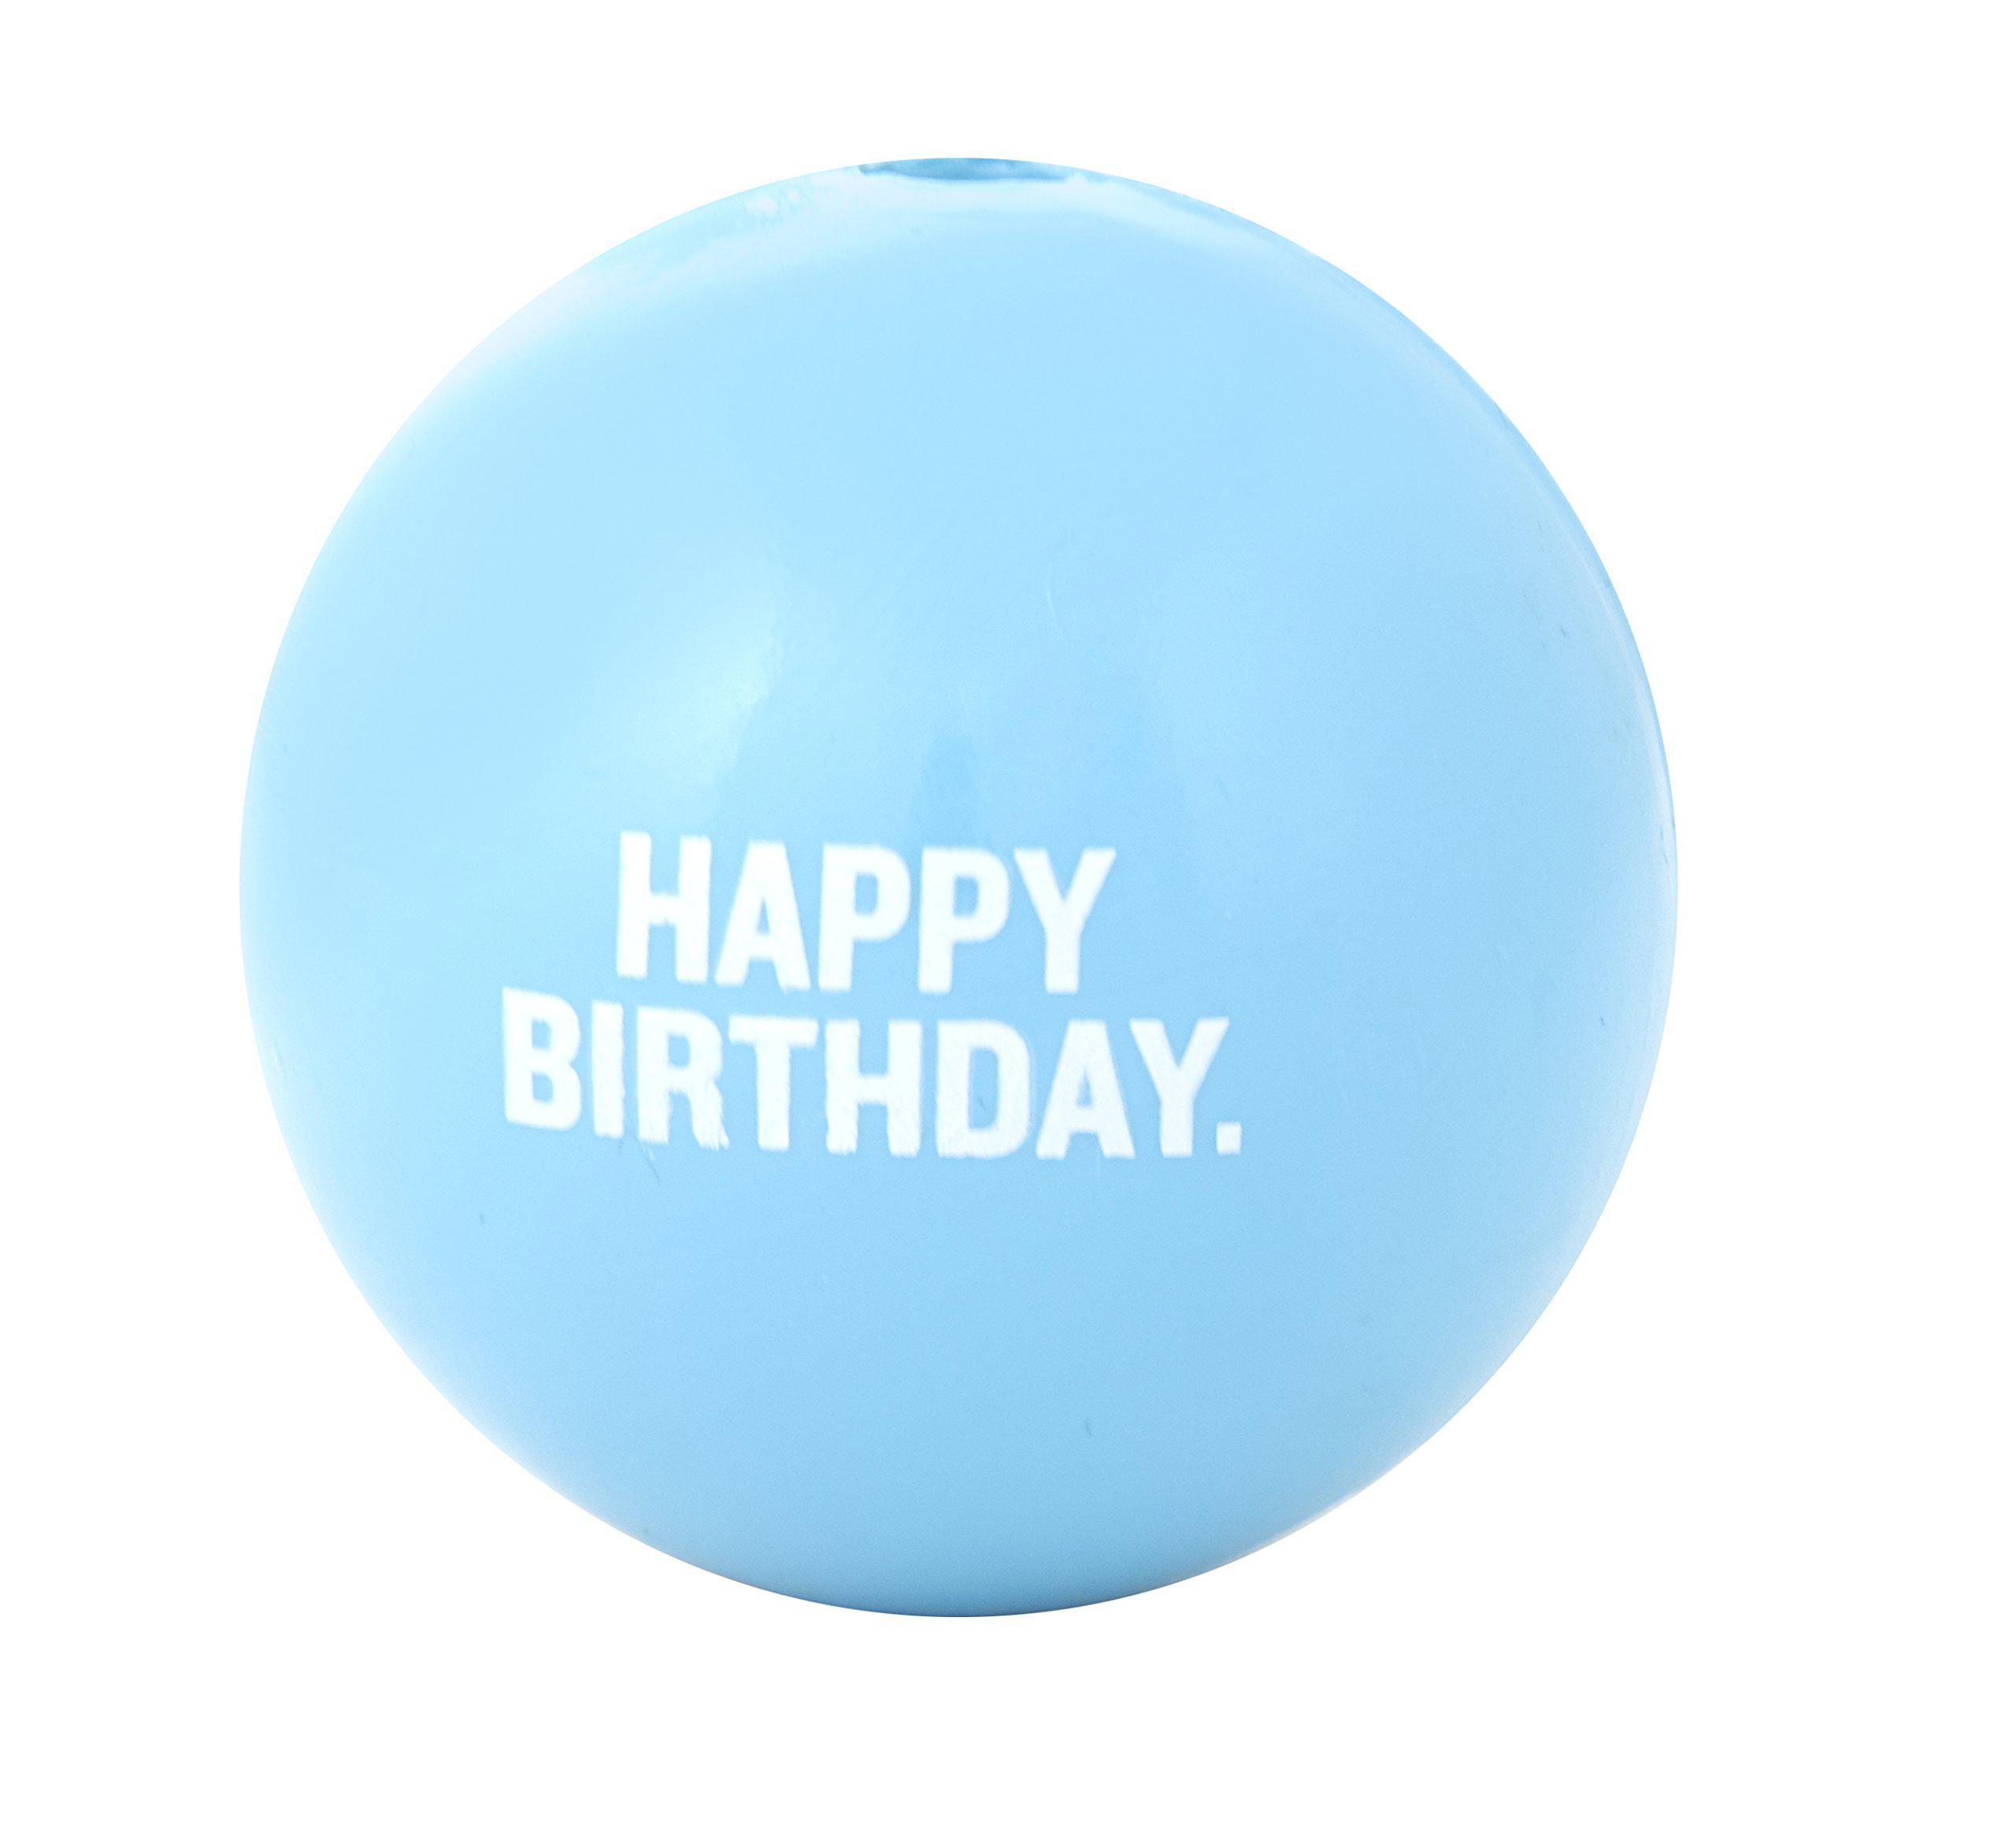 planet dog orbee-tuff happy birthday ball blue treat-dispensing dog toy